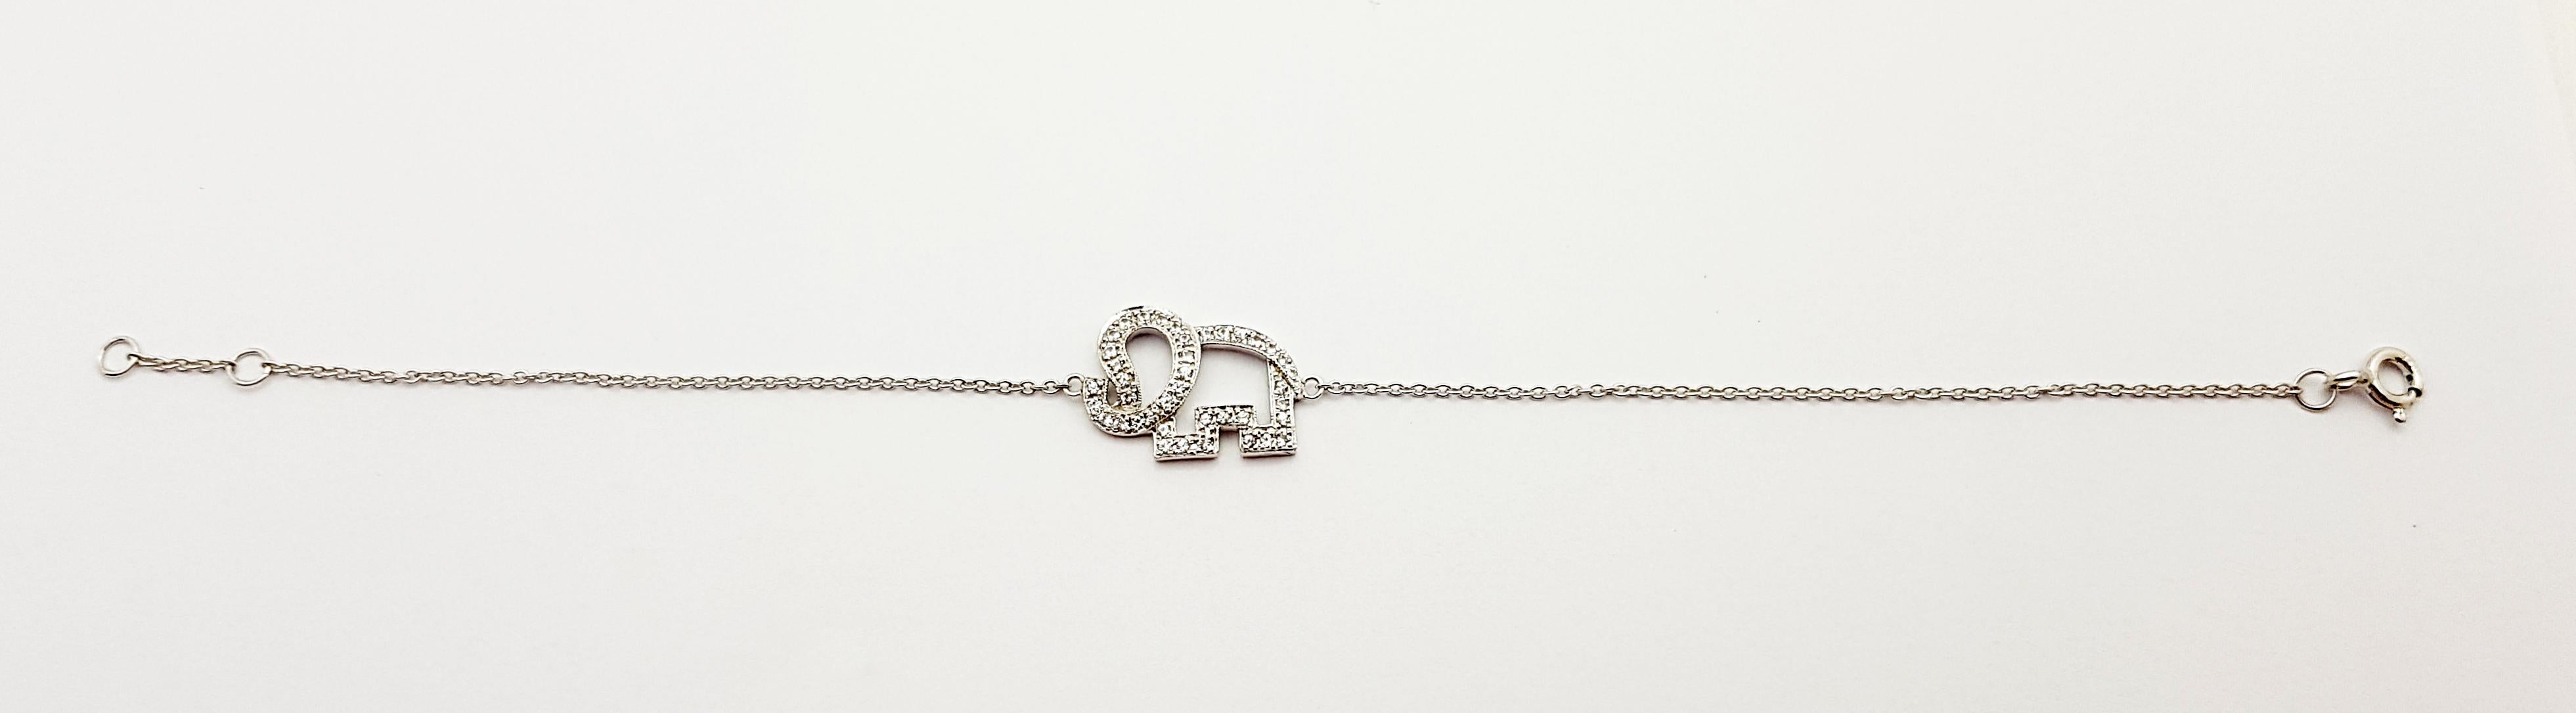 White Sapphire Elephant Bracelet set in Silver Settings For Sale 2